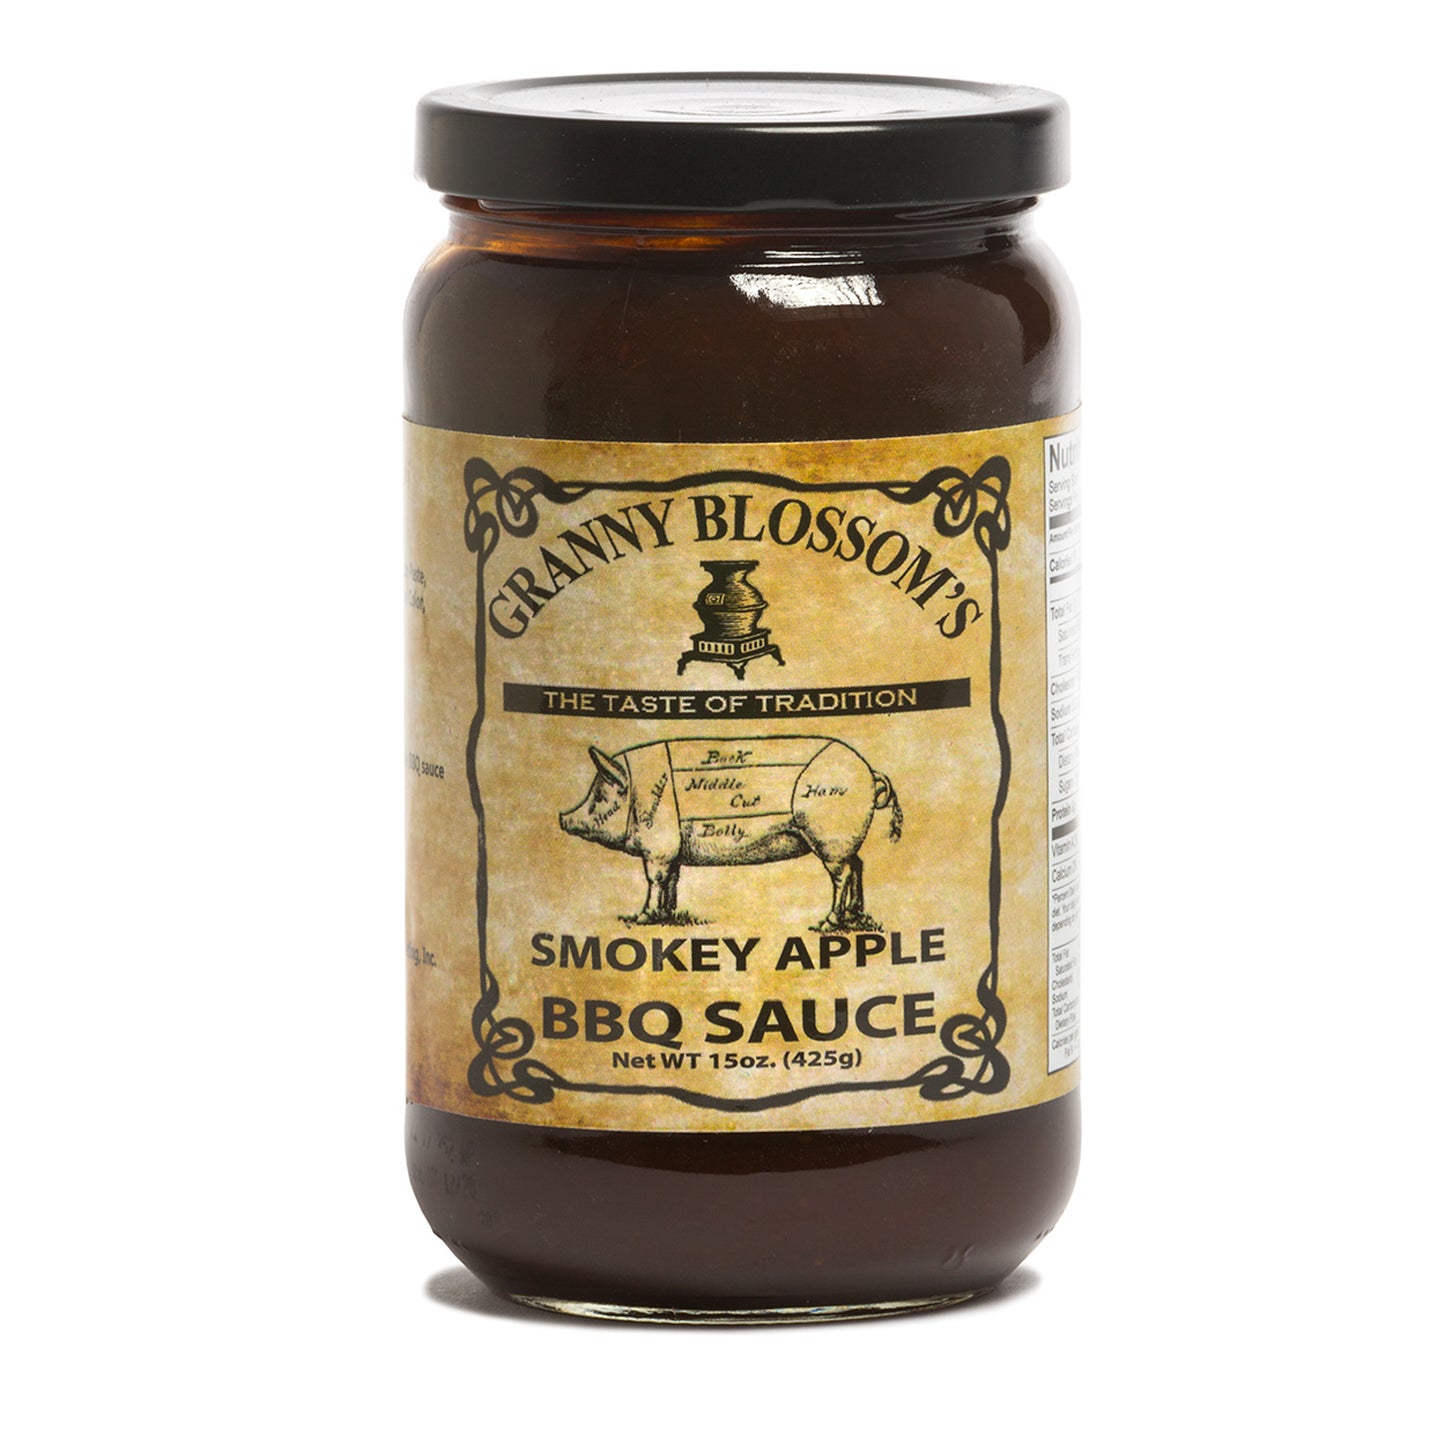 Granny Blossom's Smokey Apple BBQ Sauce